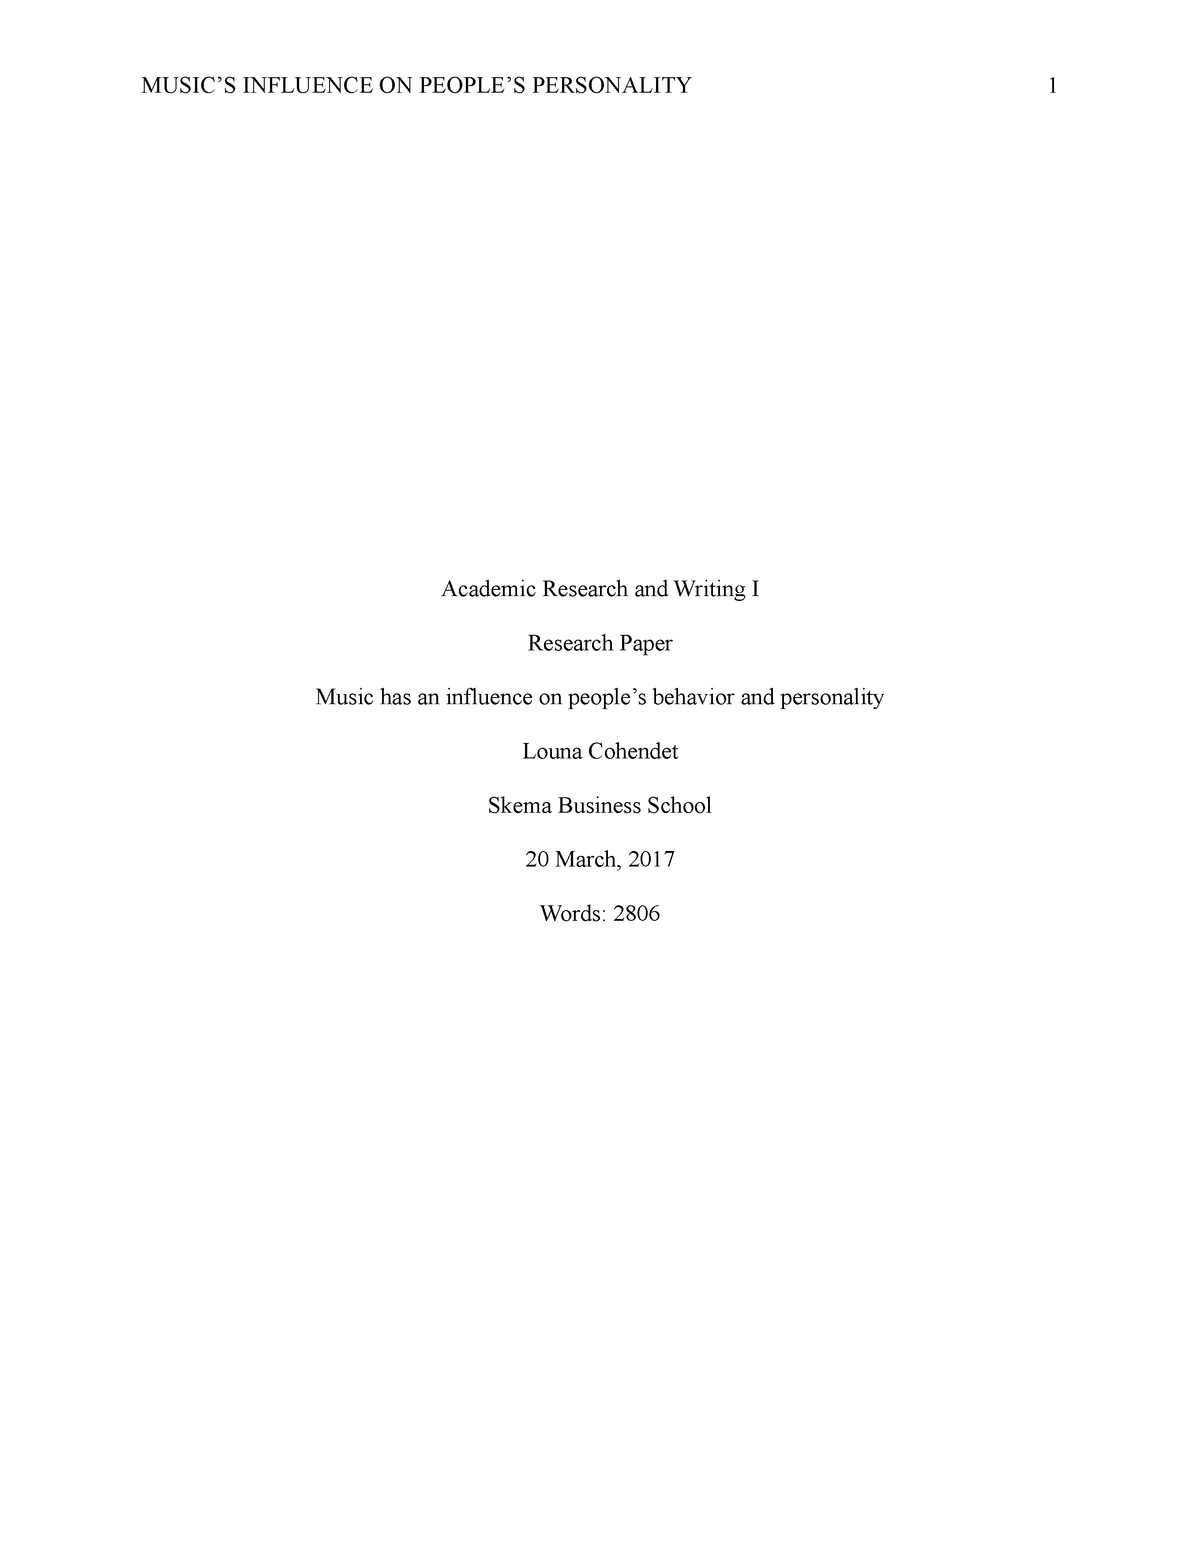 popular music dissertation pdf